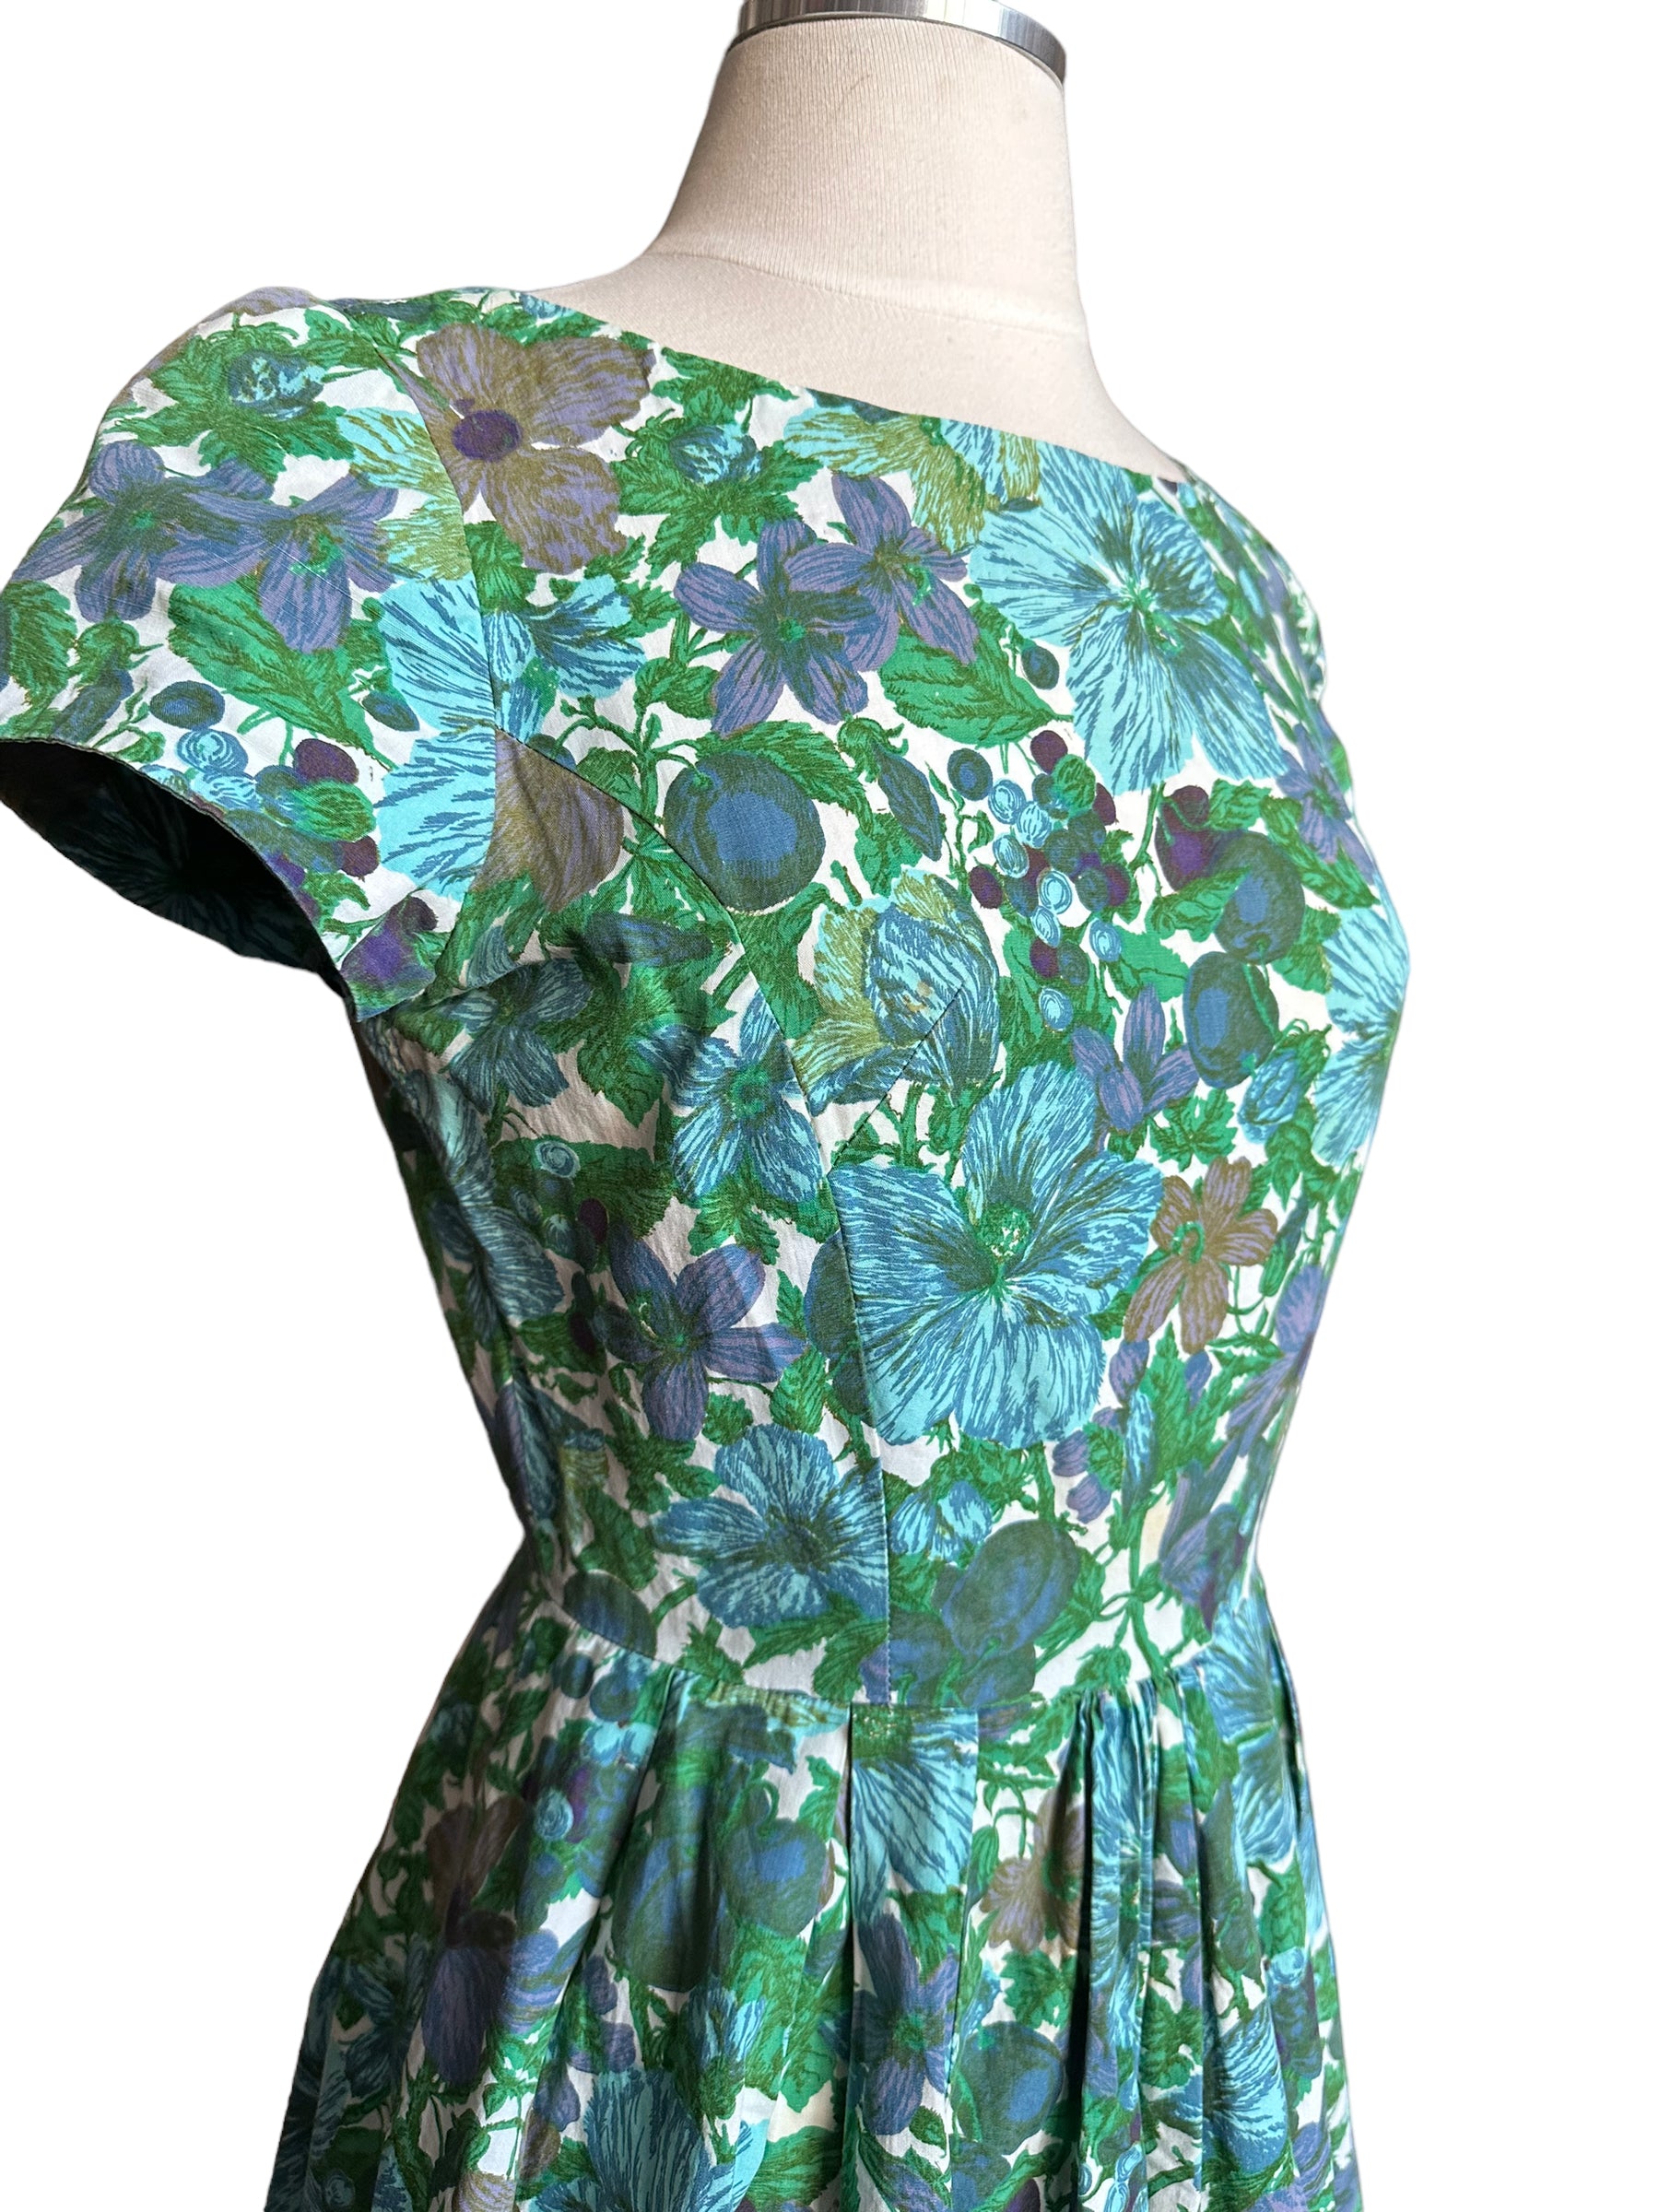 Right side view of Vintage 1950s Blue Floral Cotton Dress |  Barn Owl True Vintage | Seattle Vintage Dresses